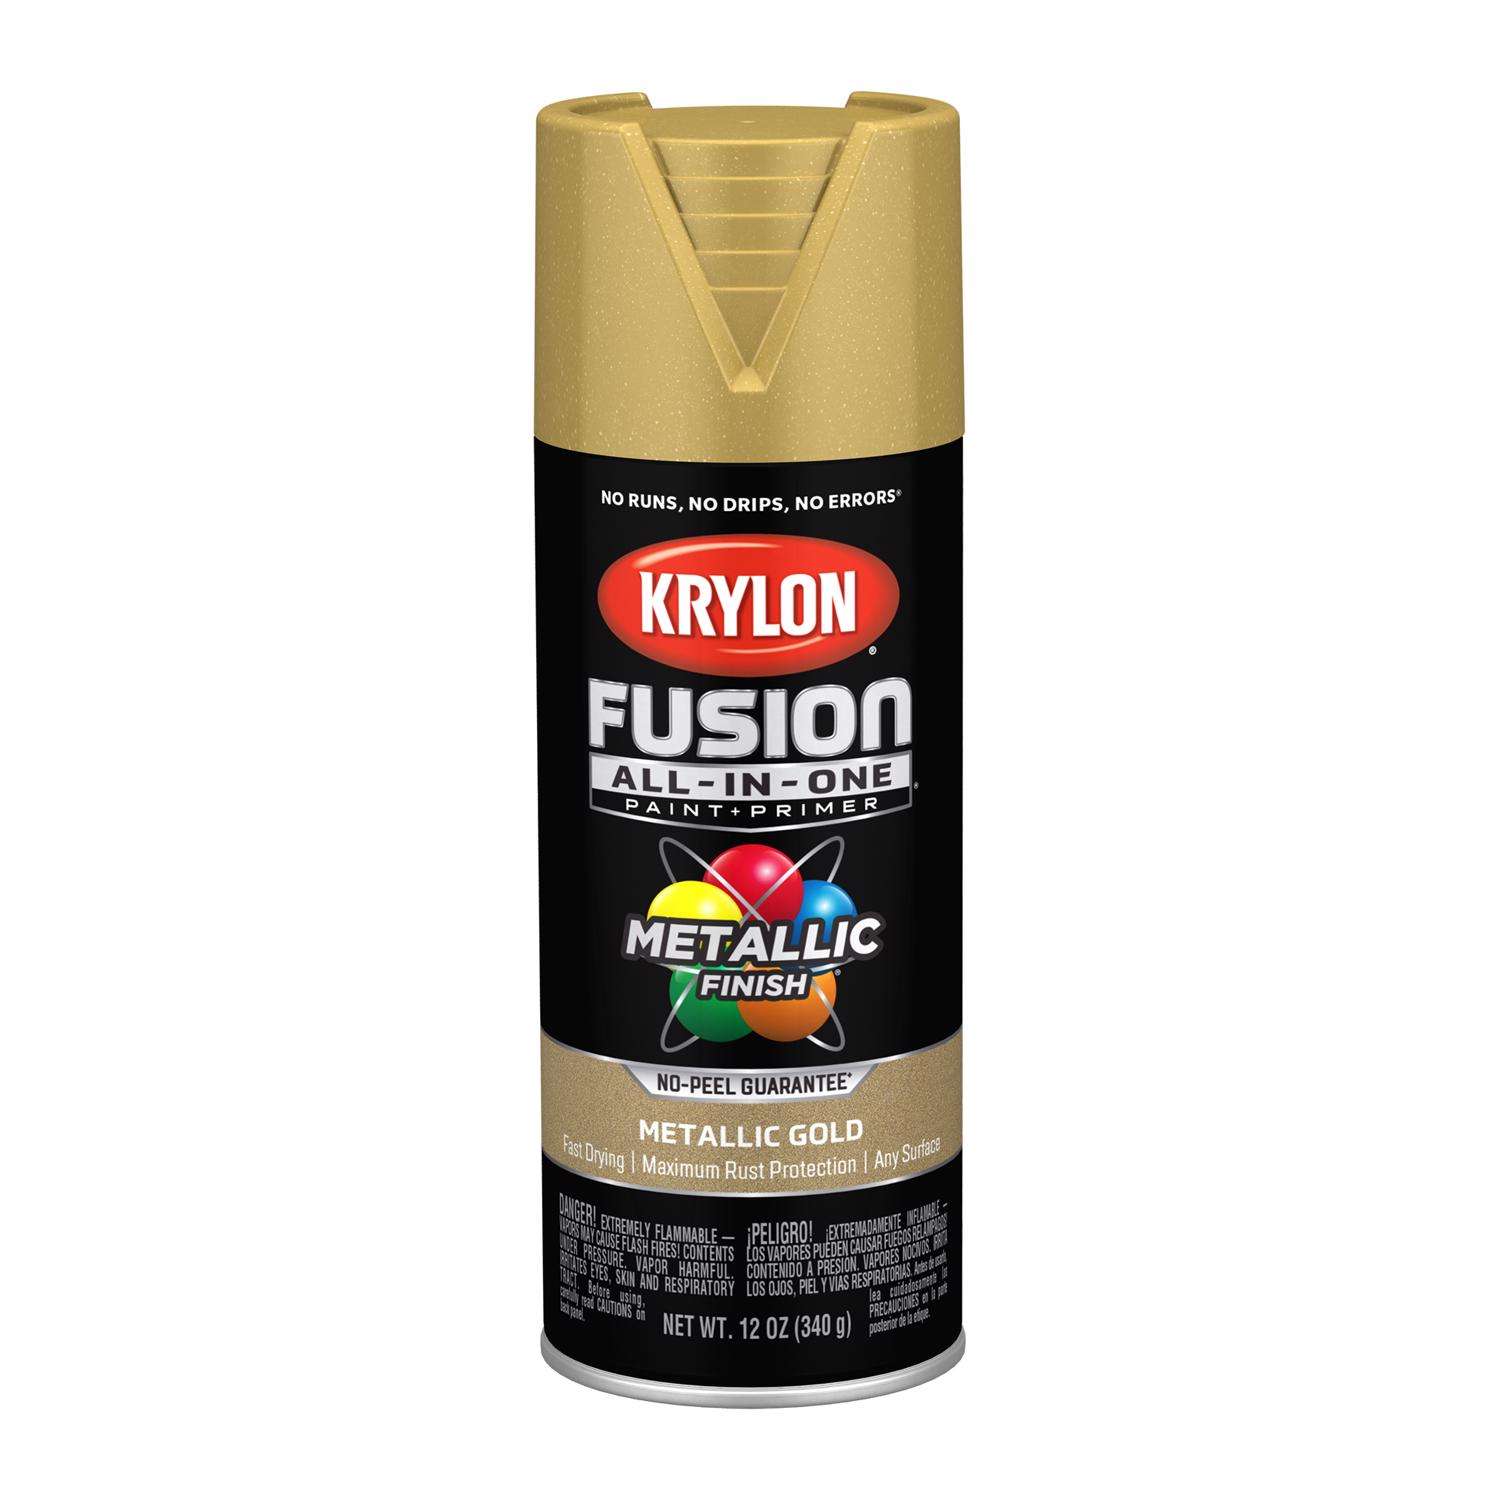 Krylon Glitter Shimmer Glistening Gold Spray Paint 4 oz - Ace Hardware